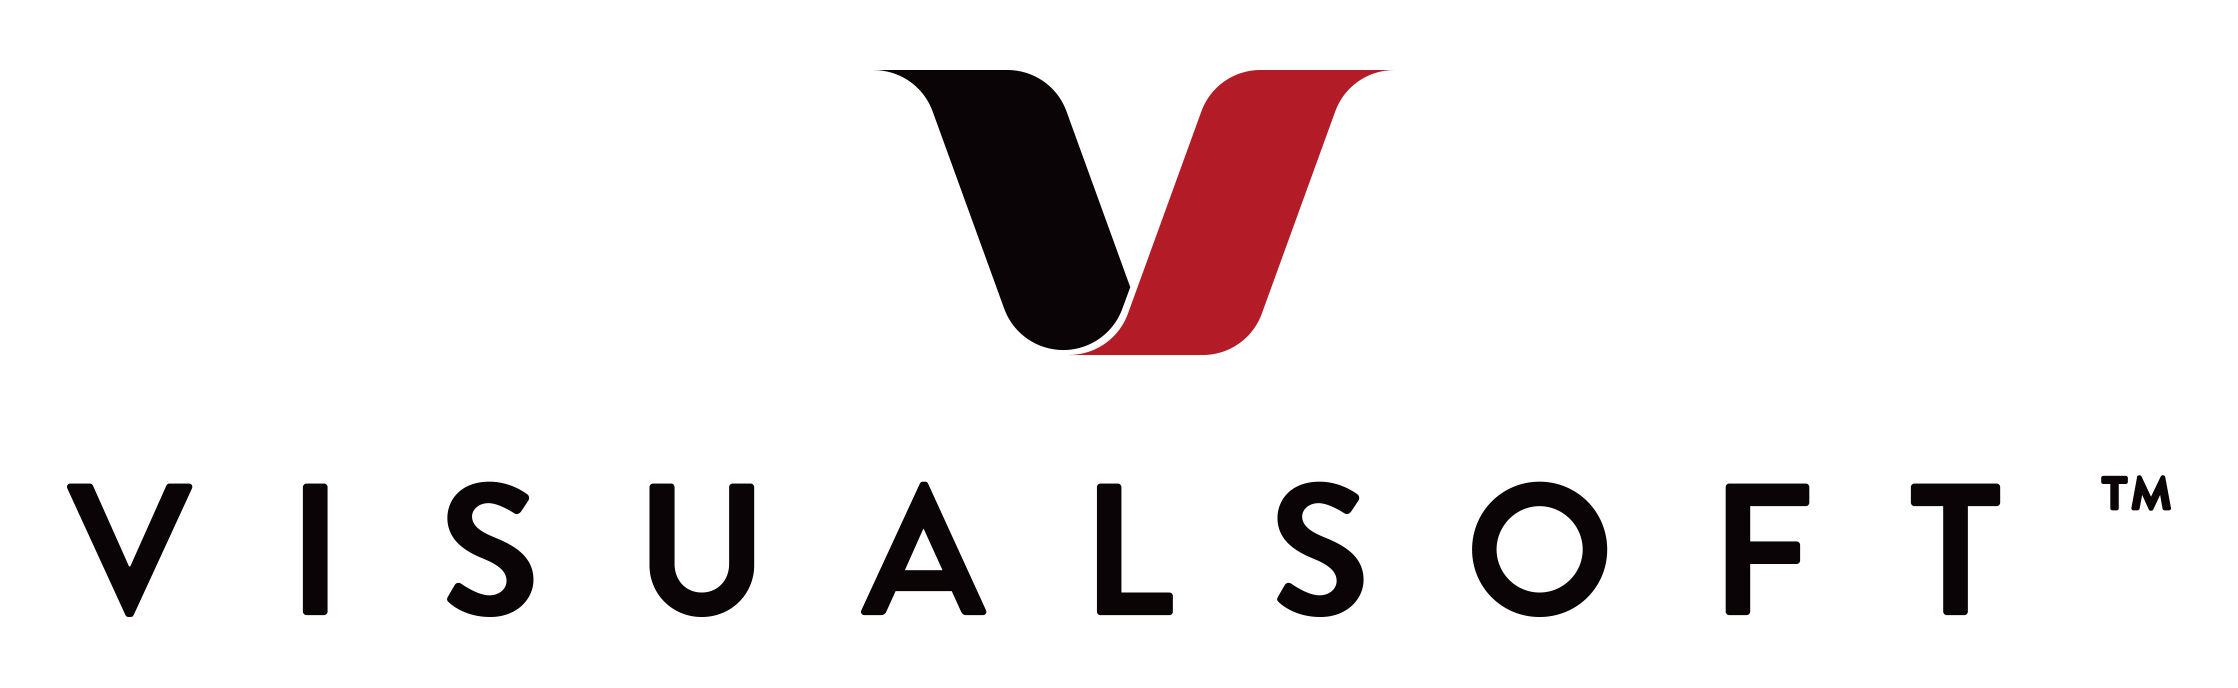 visualsoft_logo